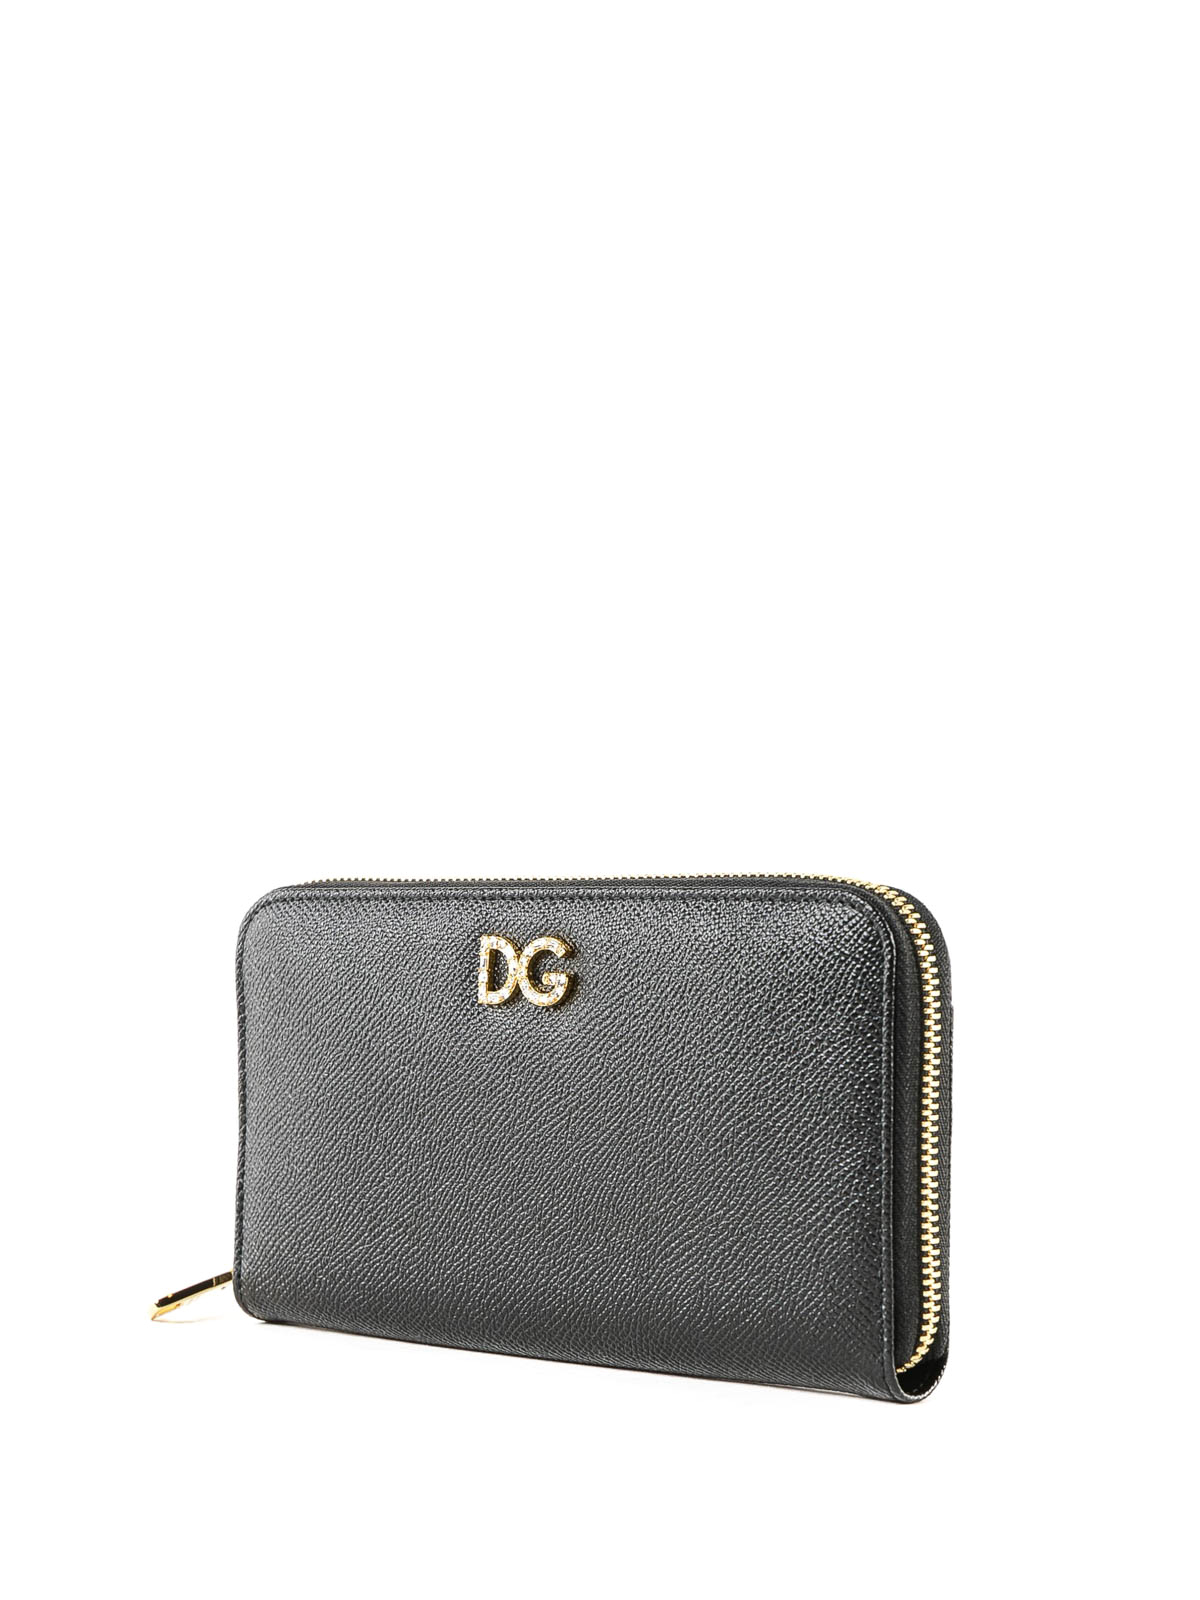 Dolce & Gabbana Dauphine Calfskin Mini Bag With Rhinestone-detailed Dg Logo  in Purple